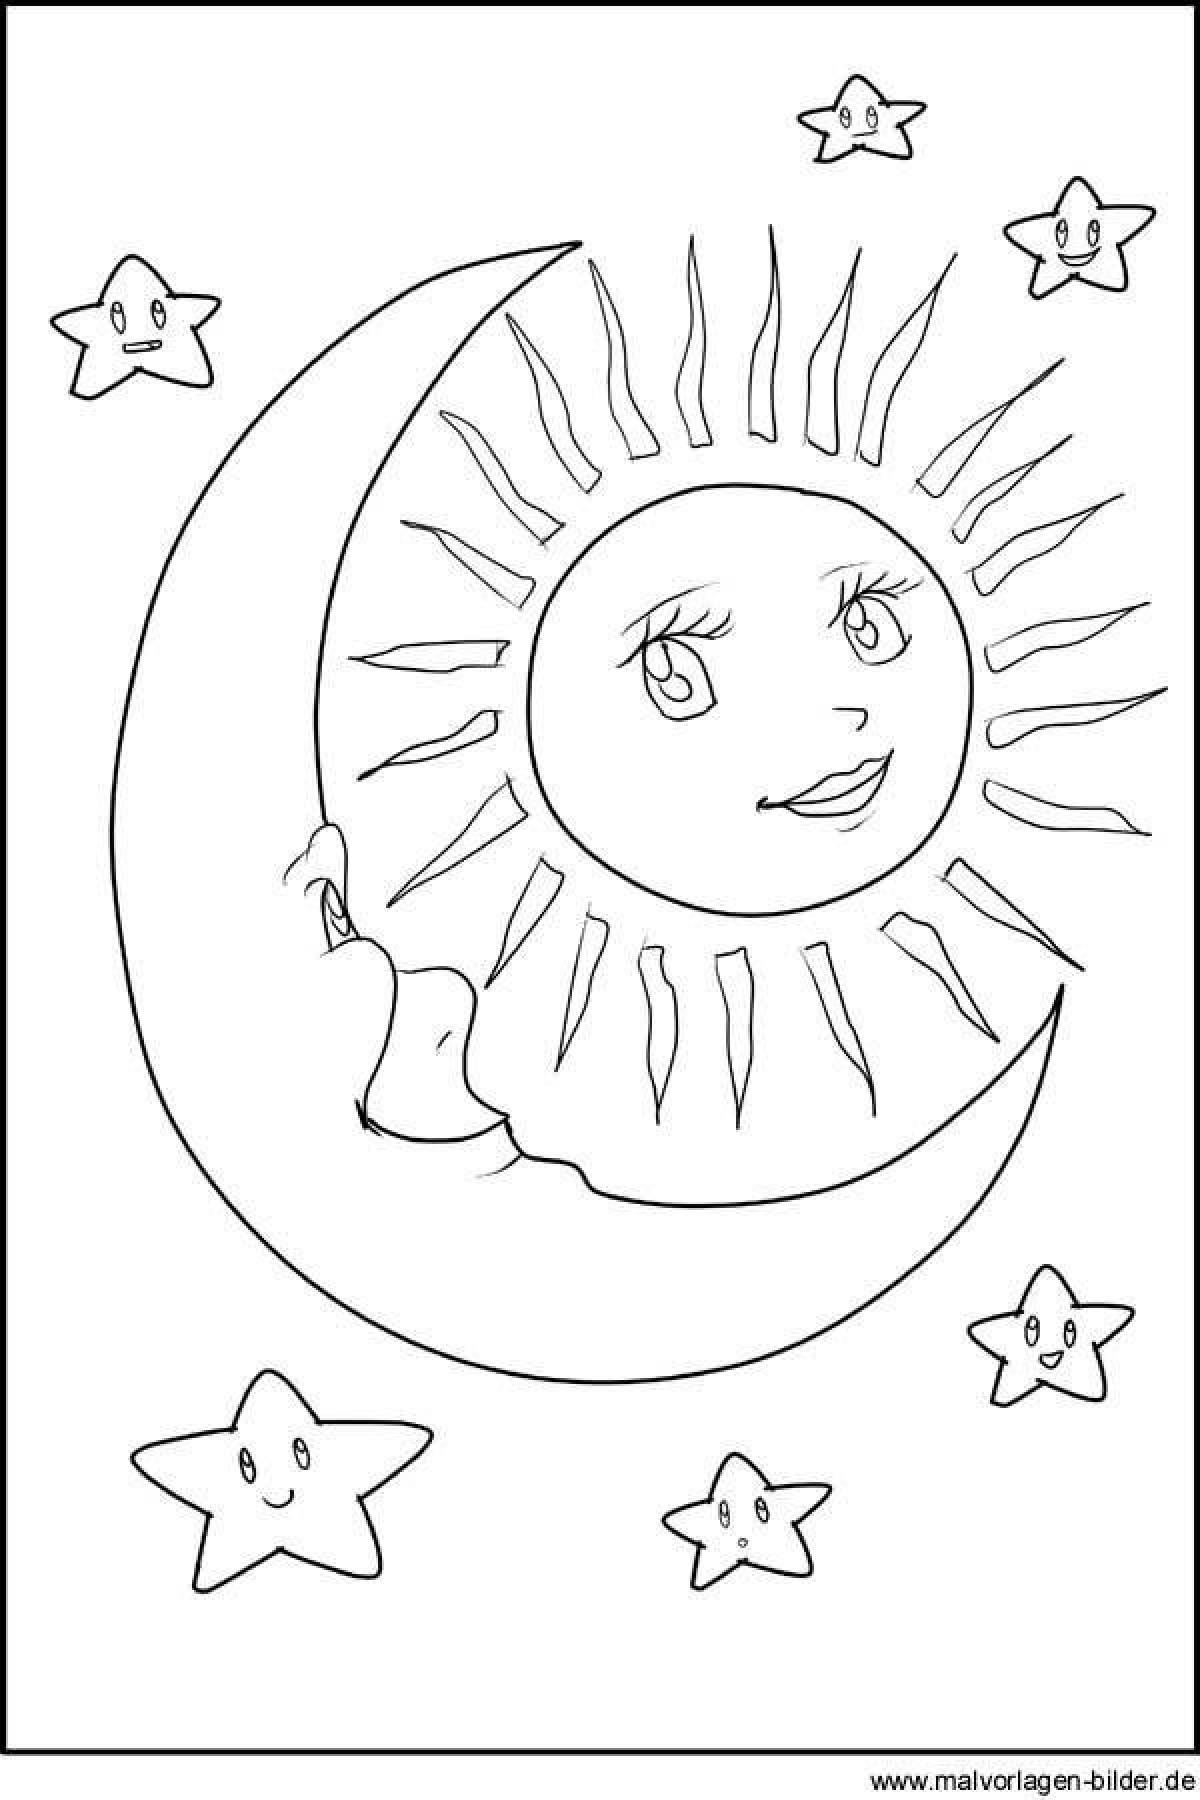 Coloring big sun and moon